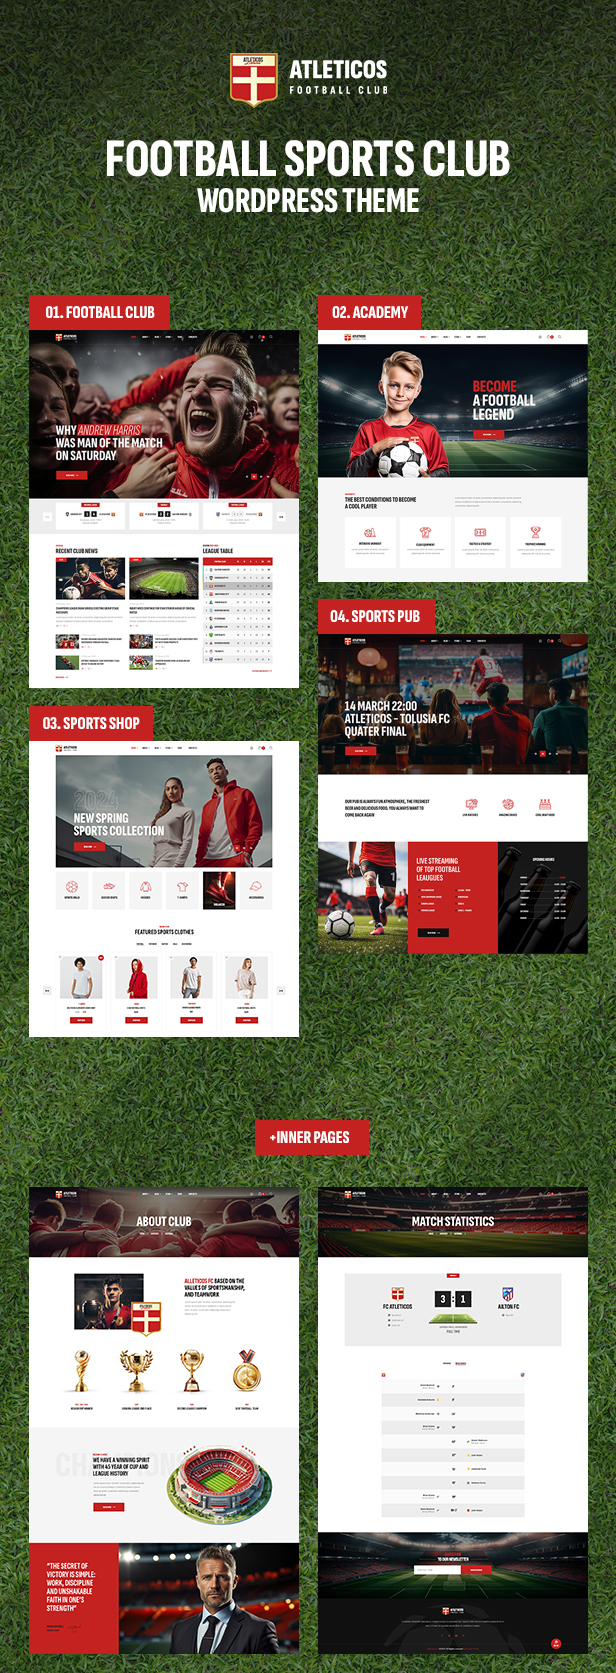 Alteticos - Football Sports Club WordPress Theme - 4